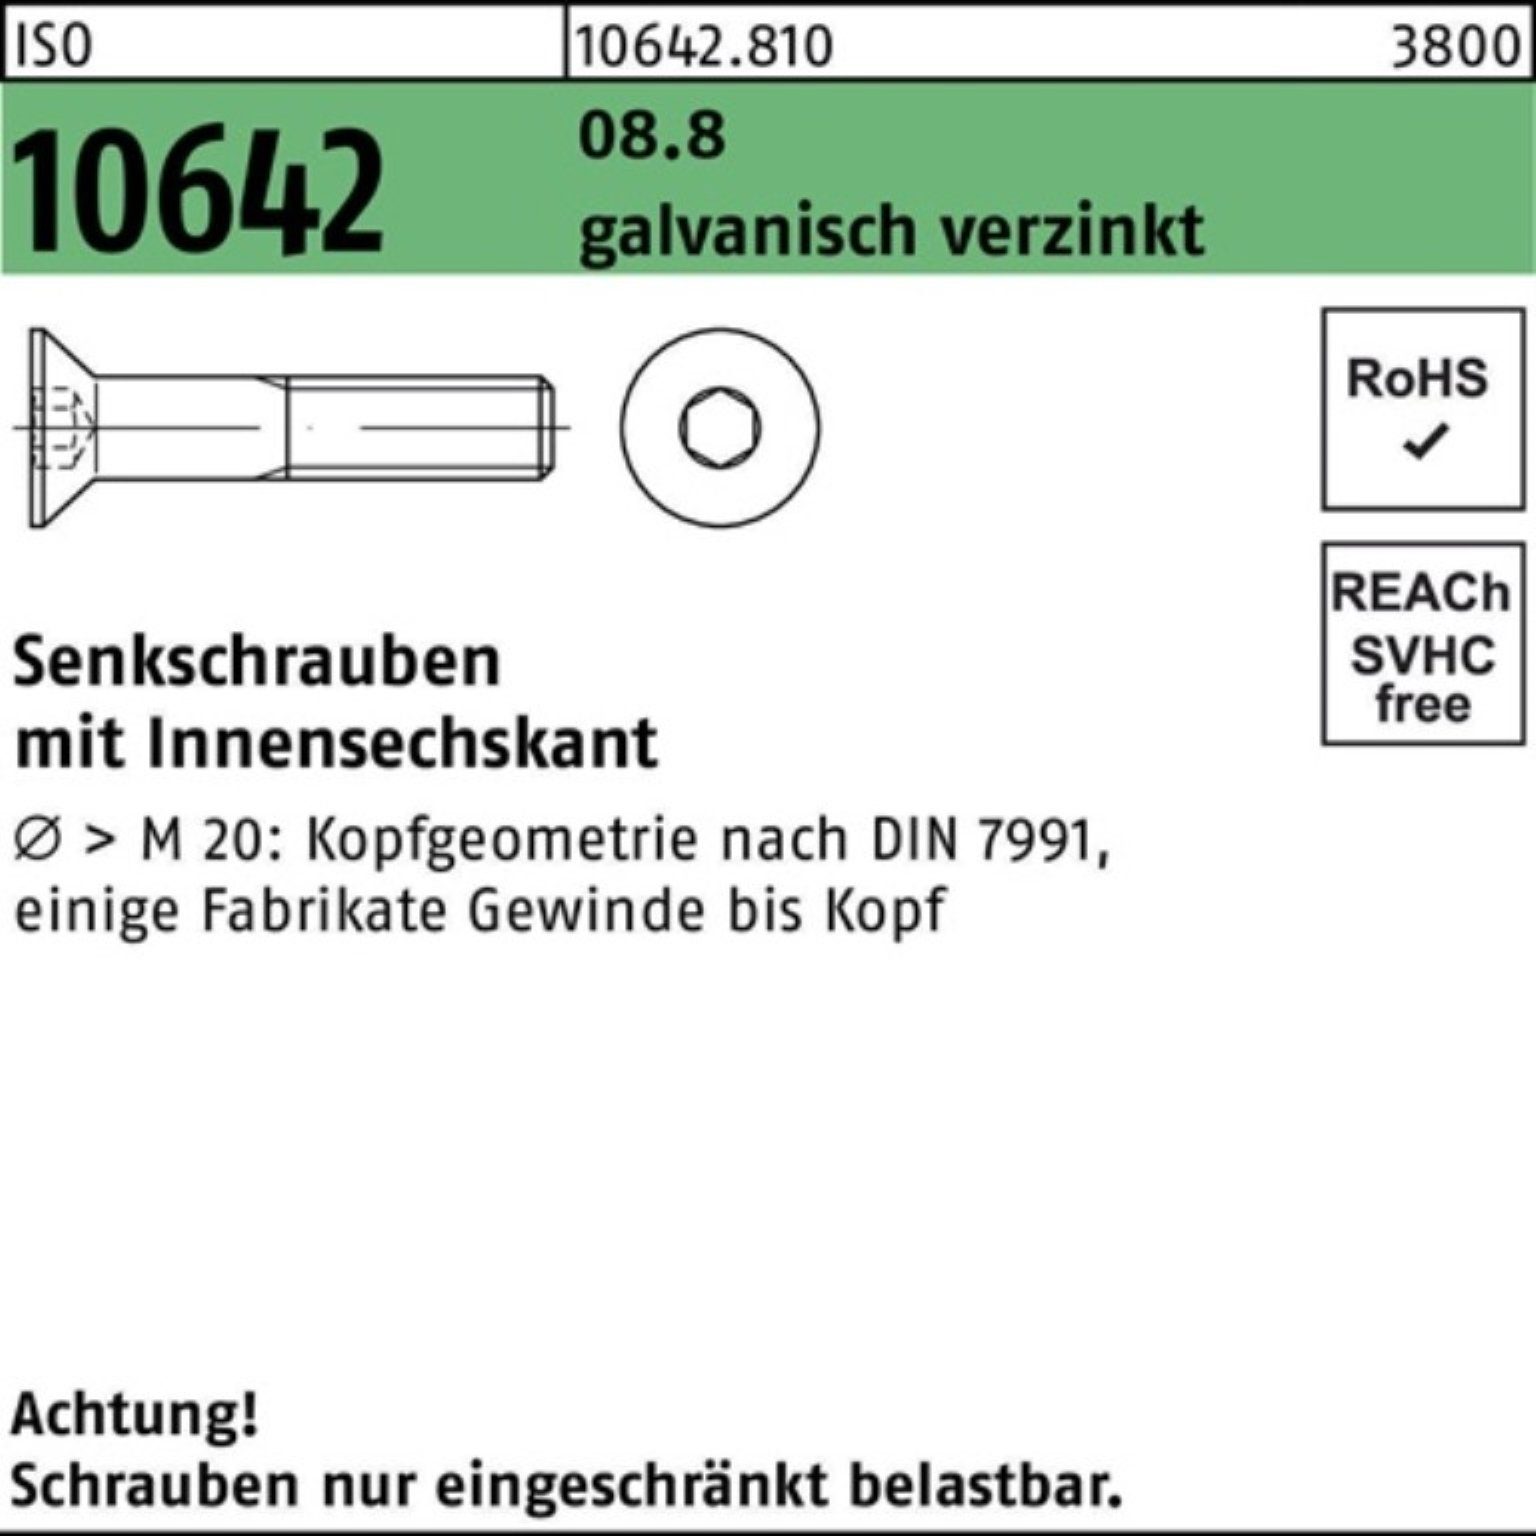 Innen-6kt 100 M5x Reyher 10642 8.8 Pack 20 Senkschraube 100er galv.verz. ISO Senkschraube